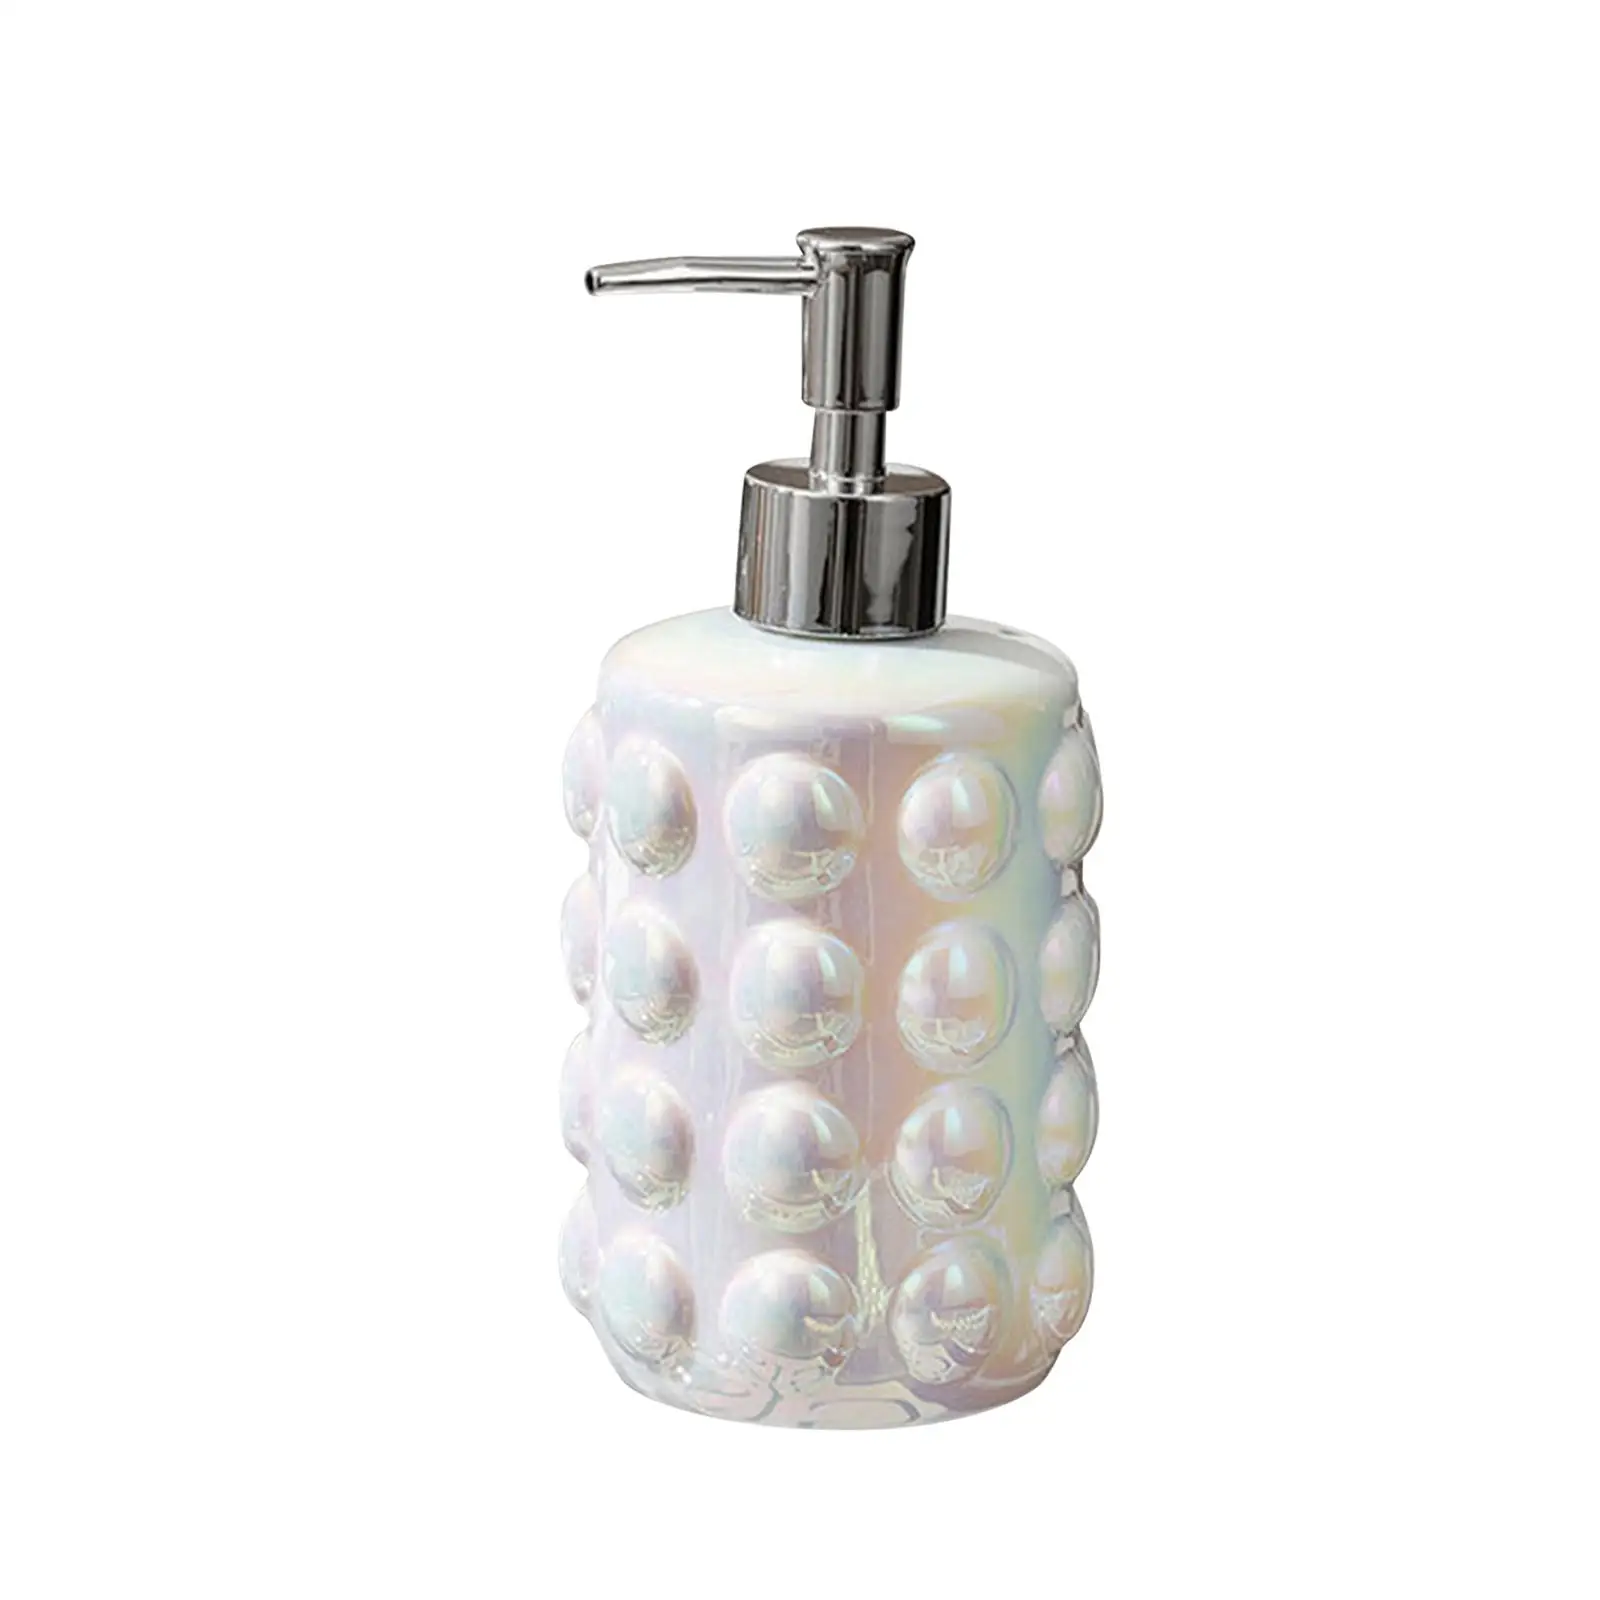 Ceramic Liquid Hand Soap Dispenser 350ml Countertop Soap Dispenser for Bathroom Washroom Size 8cmx12cm Elegant Bubble Appearance